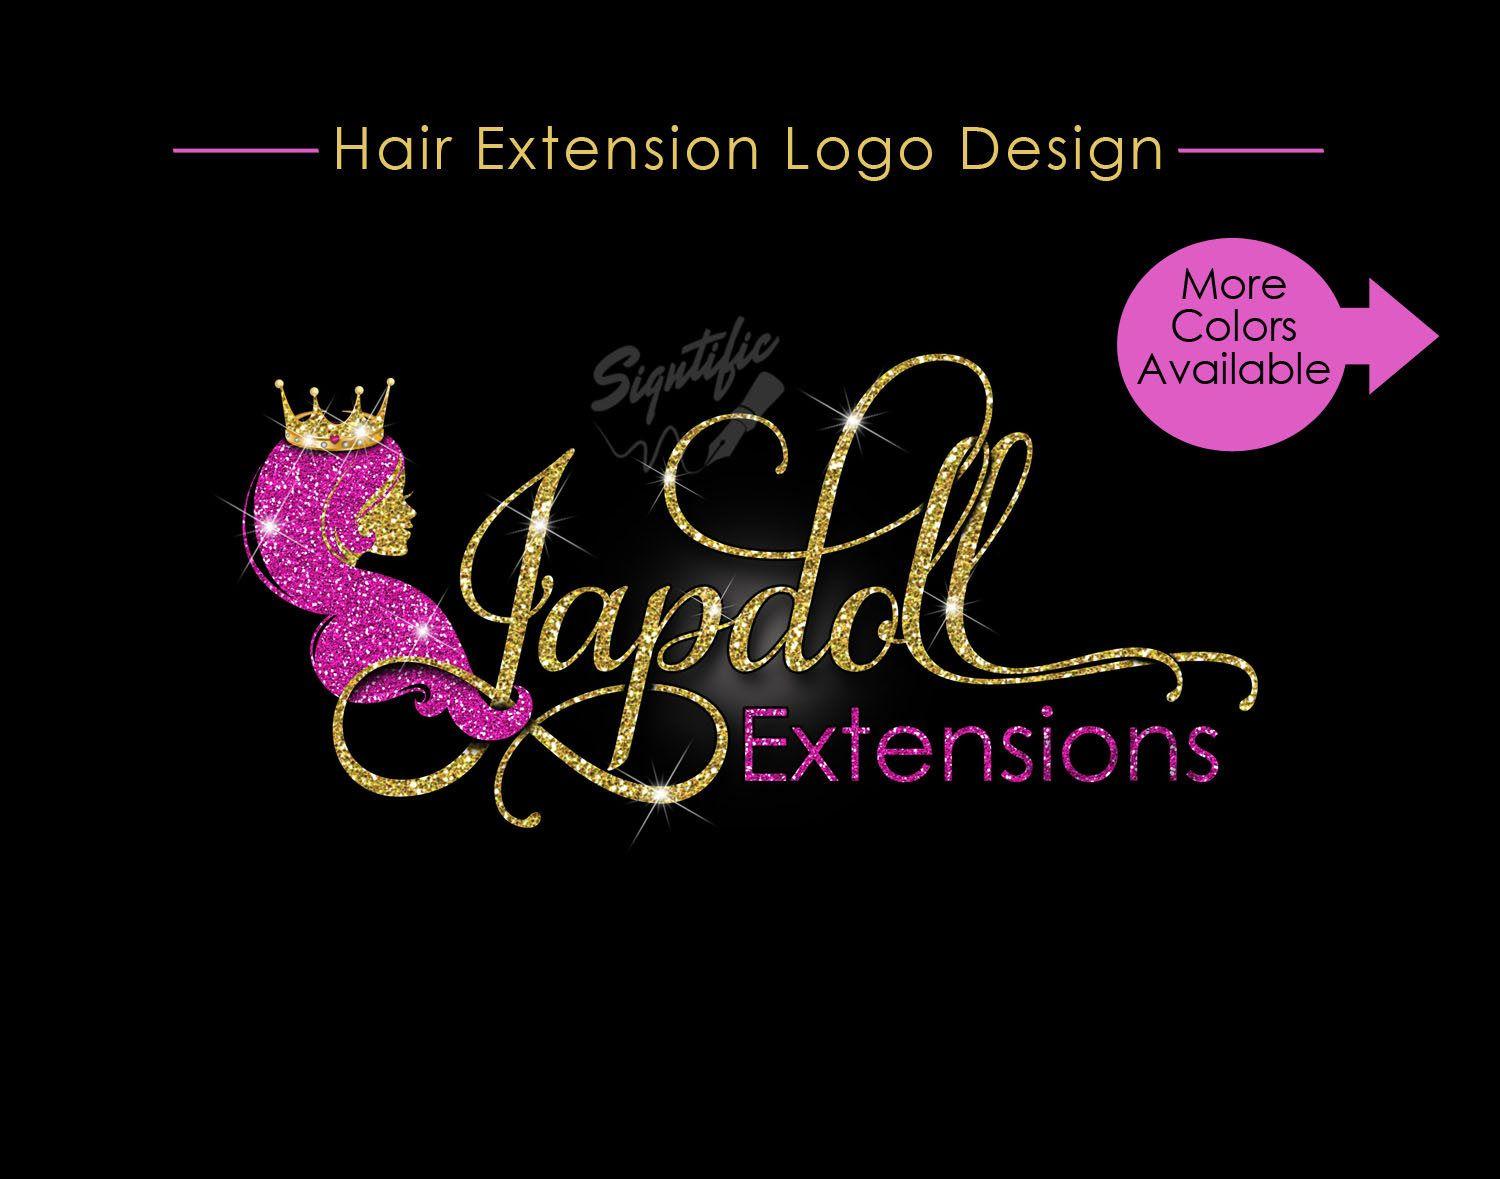 Pink Glitter Logo - Hair Extensions Logo, Hair Logo Design, Hair Collection Logo, Gold ...